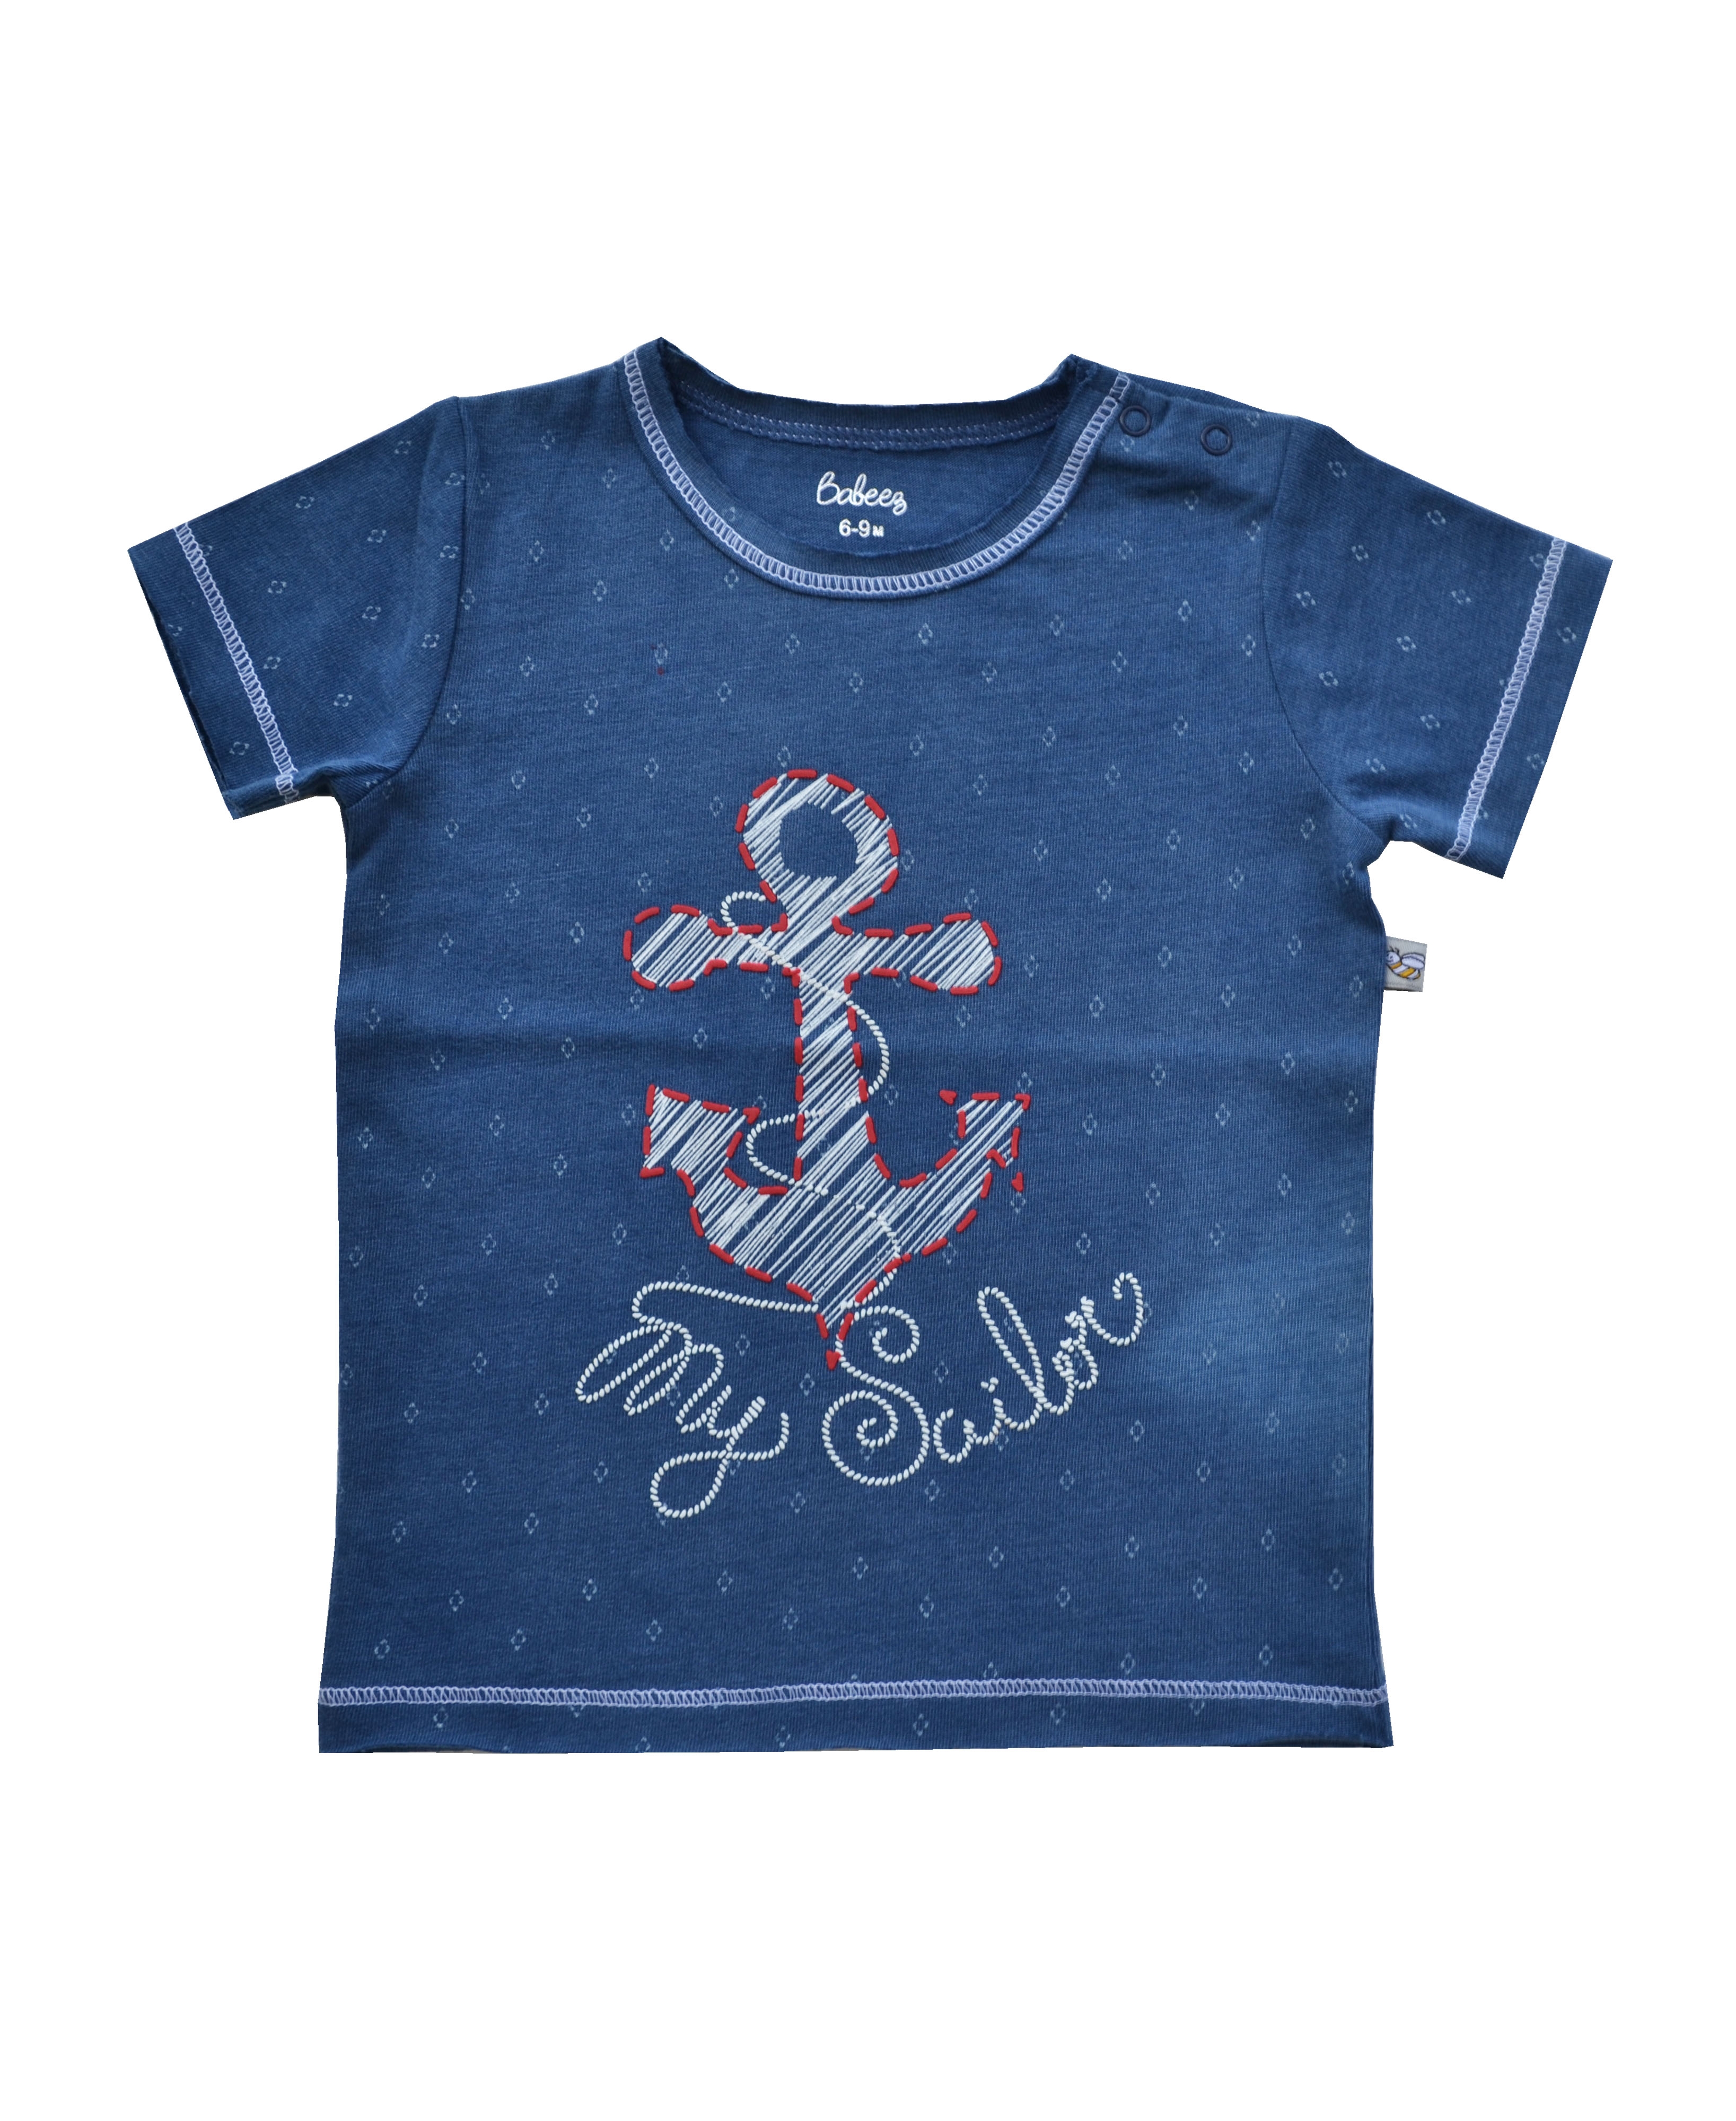 Babeez | My Sailor print on Denim Look T-Shirt (100% Cotton Single Jersey) undefined